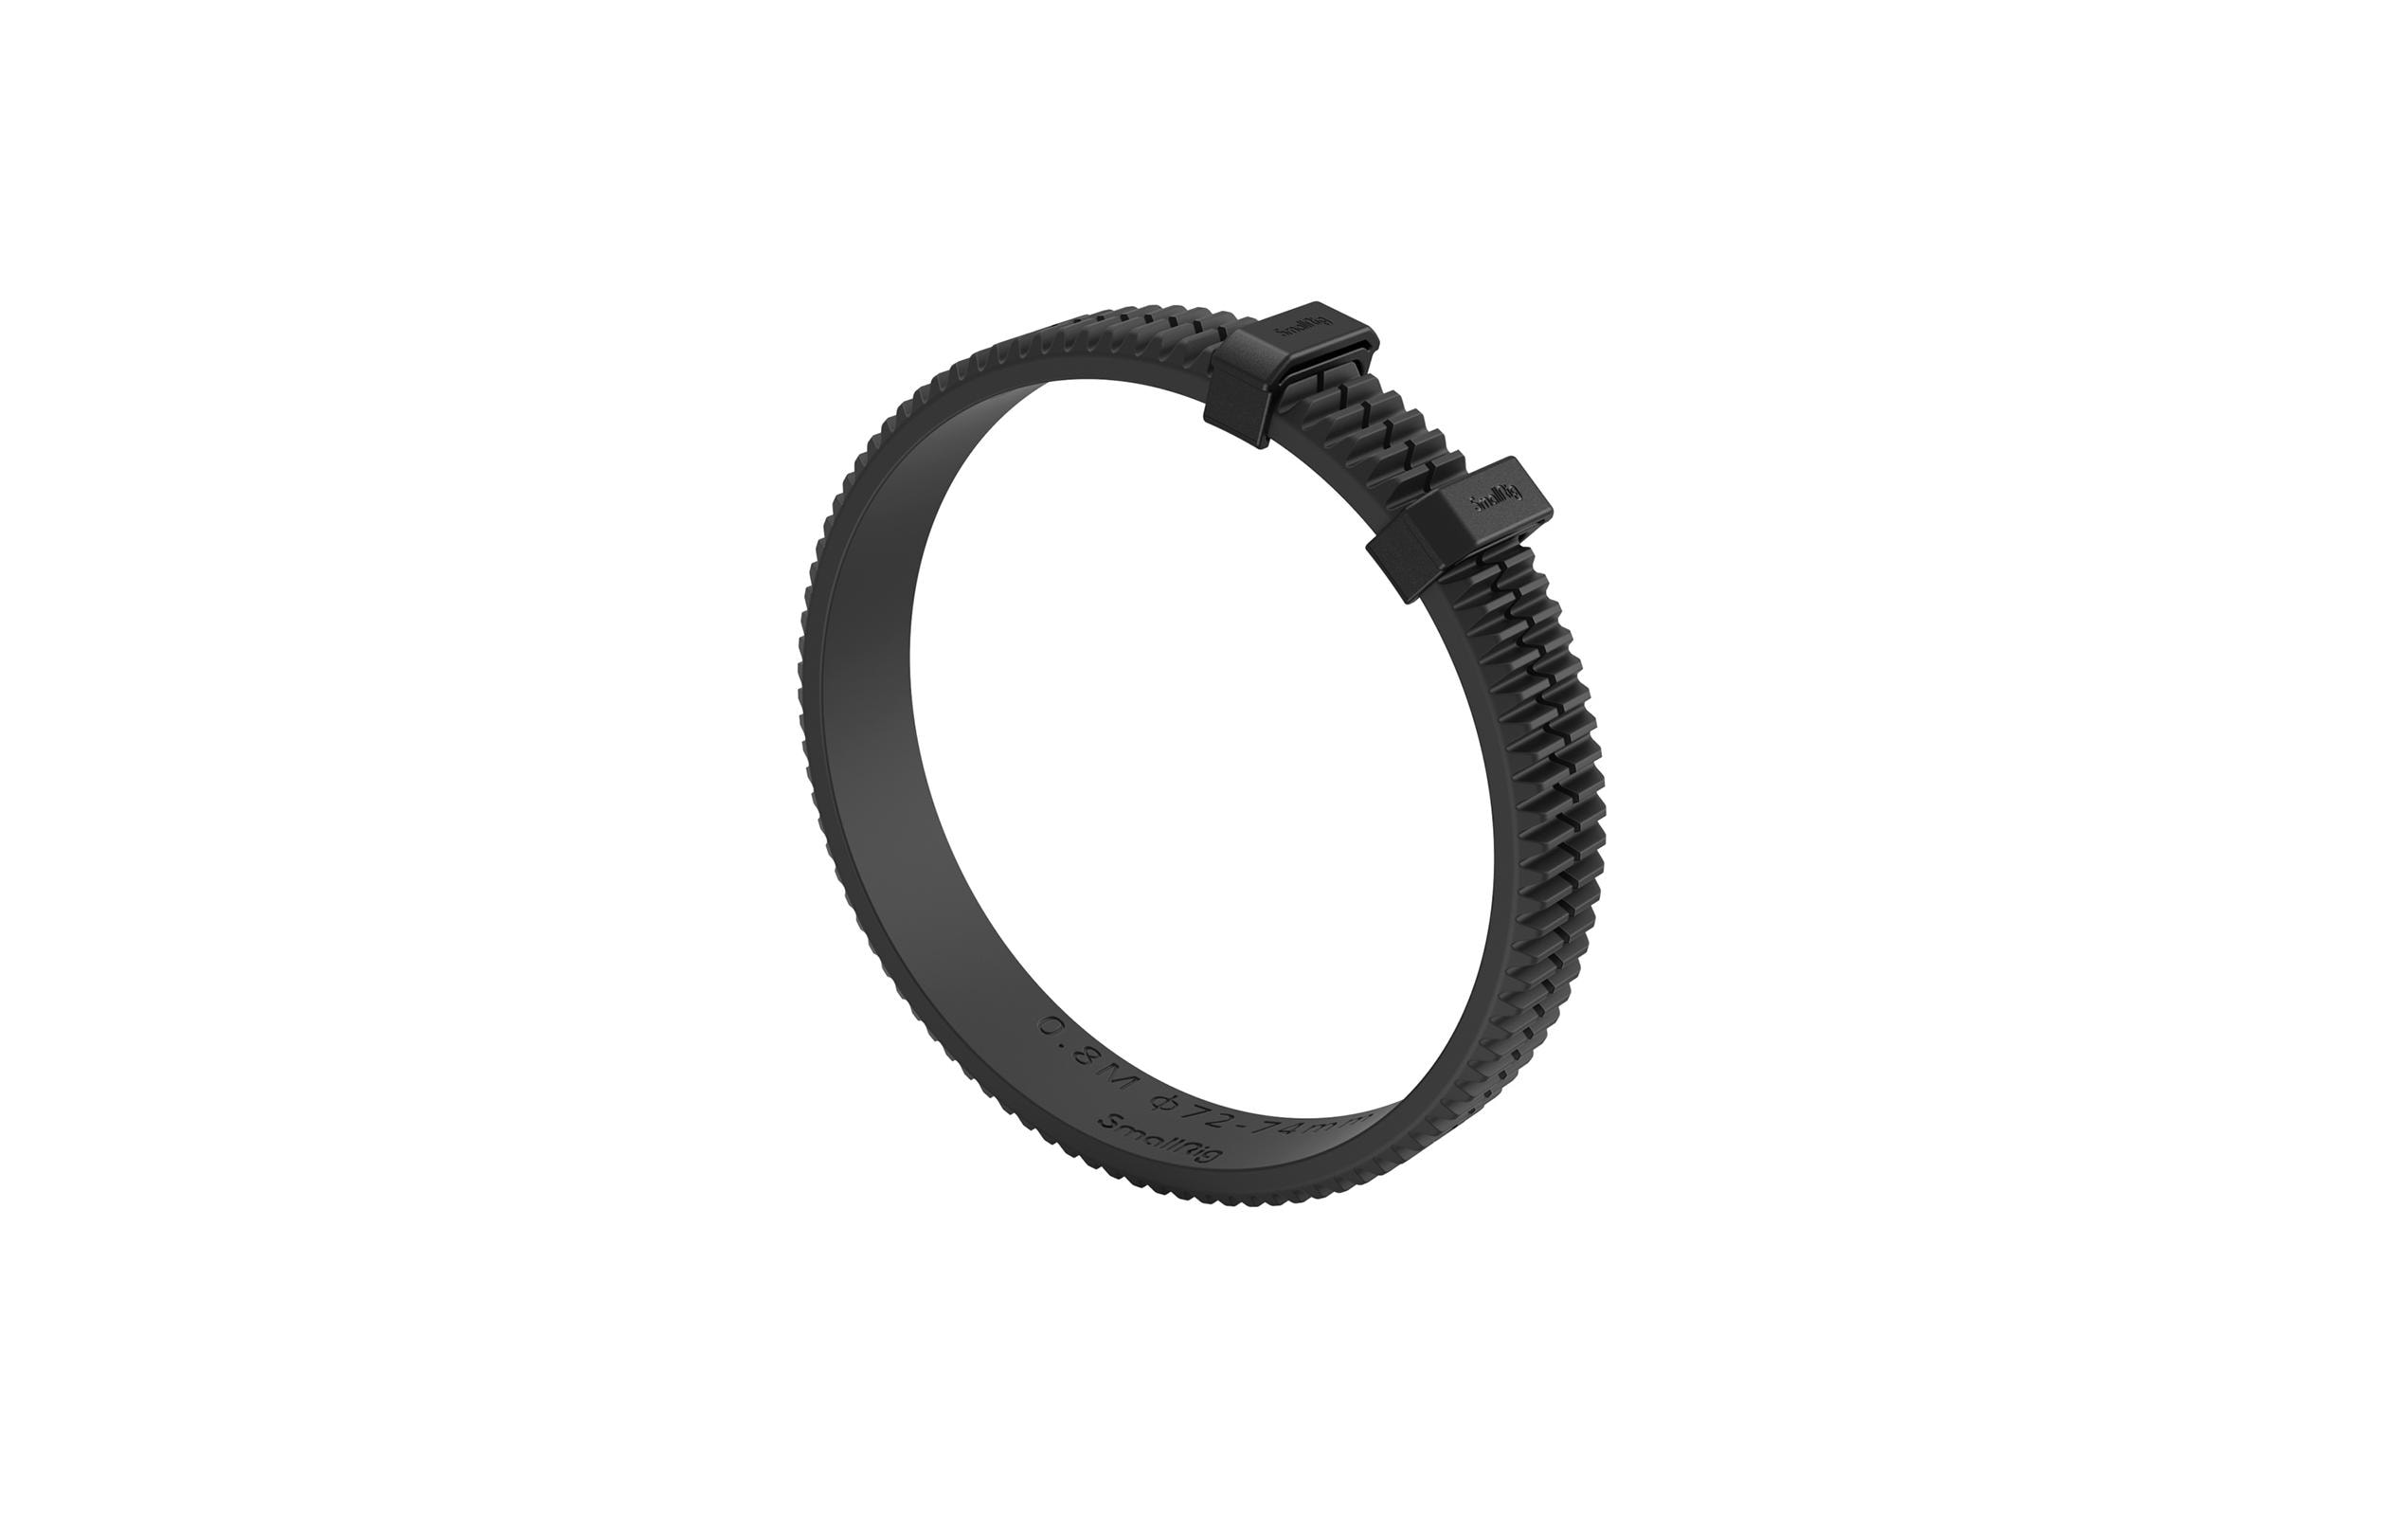 Smallrig Zubehörset Seamless Focus Gear Ring Kit ab Φ62.5mm bis Φ83mm